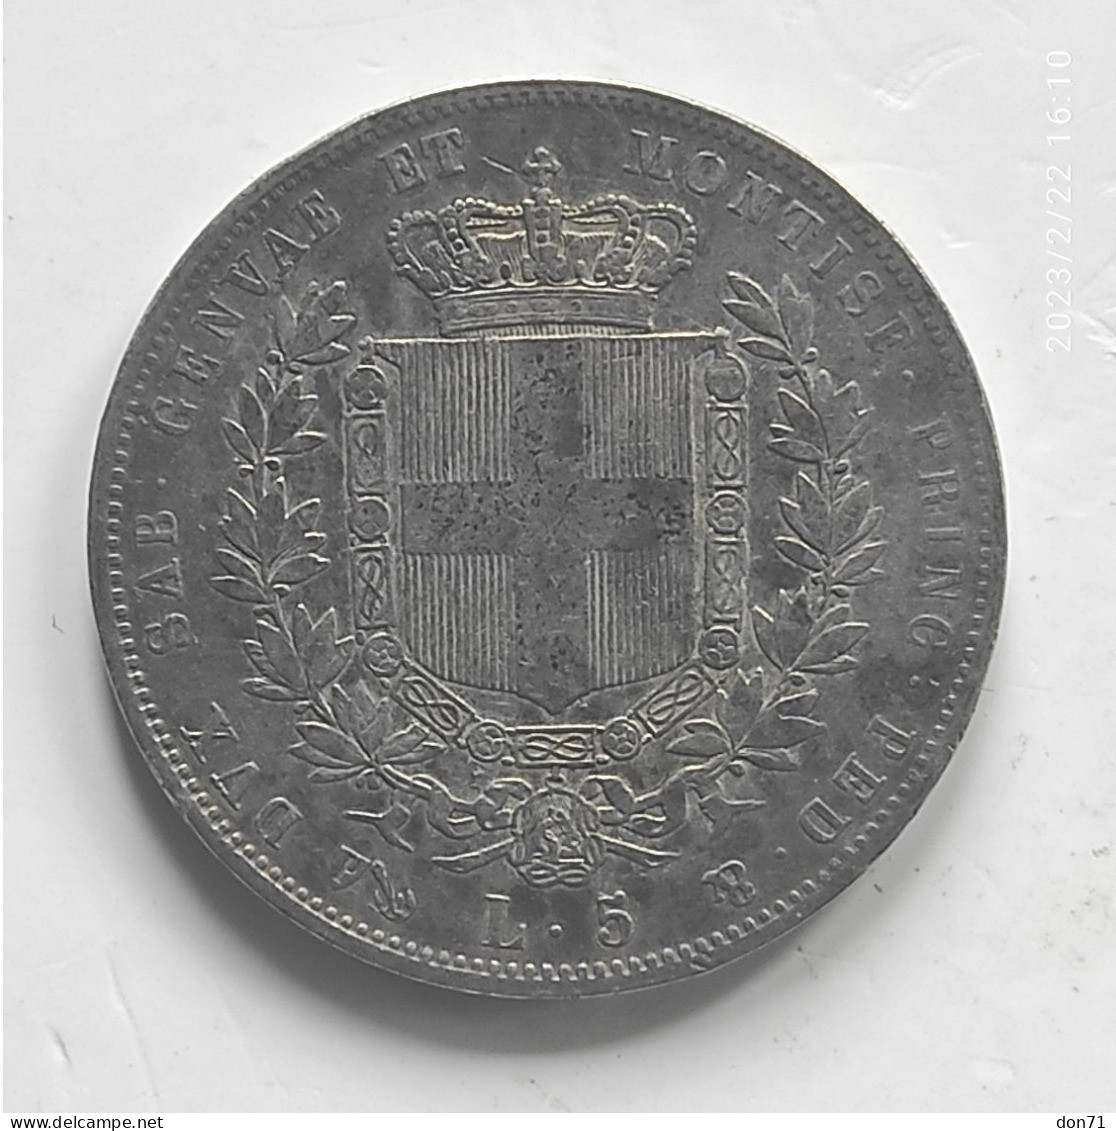 Sardegna - 5 lire 1854 (G)